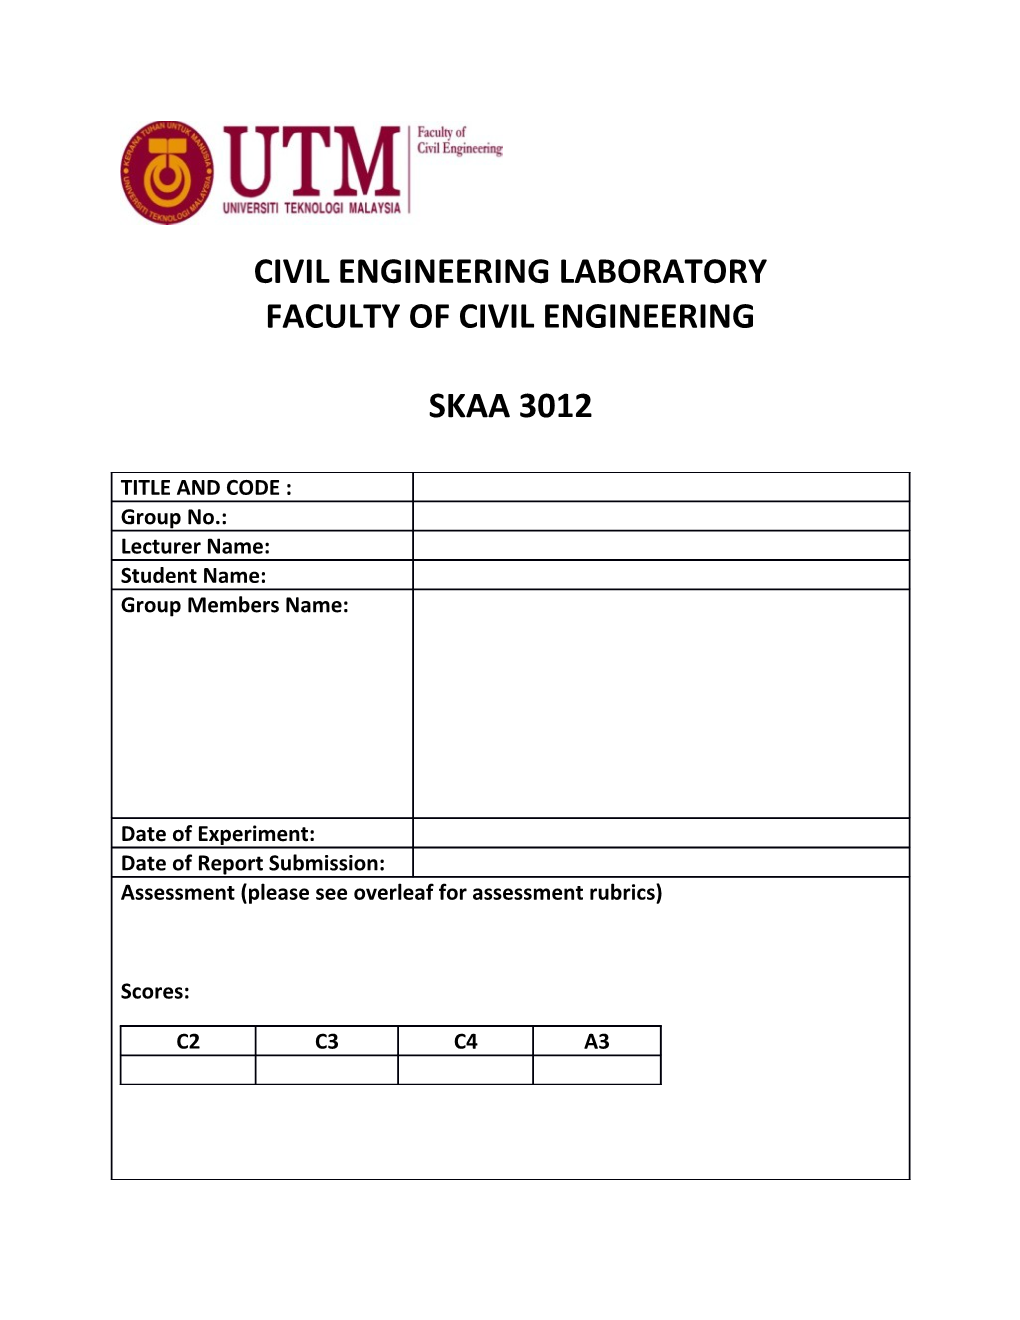 Civil Engineering Laboratory